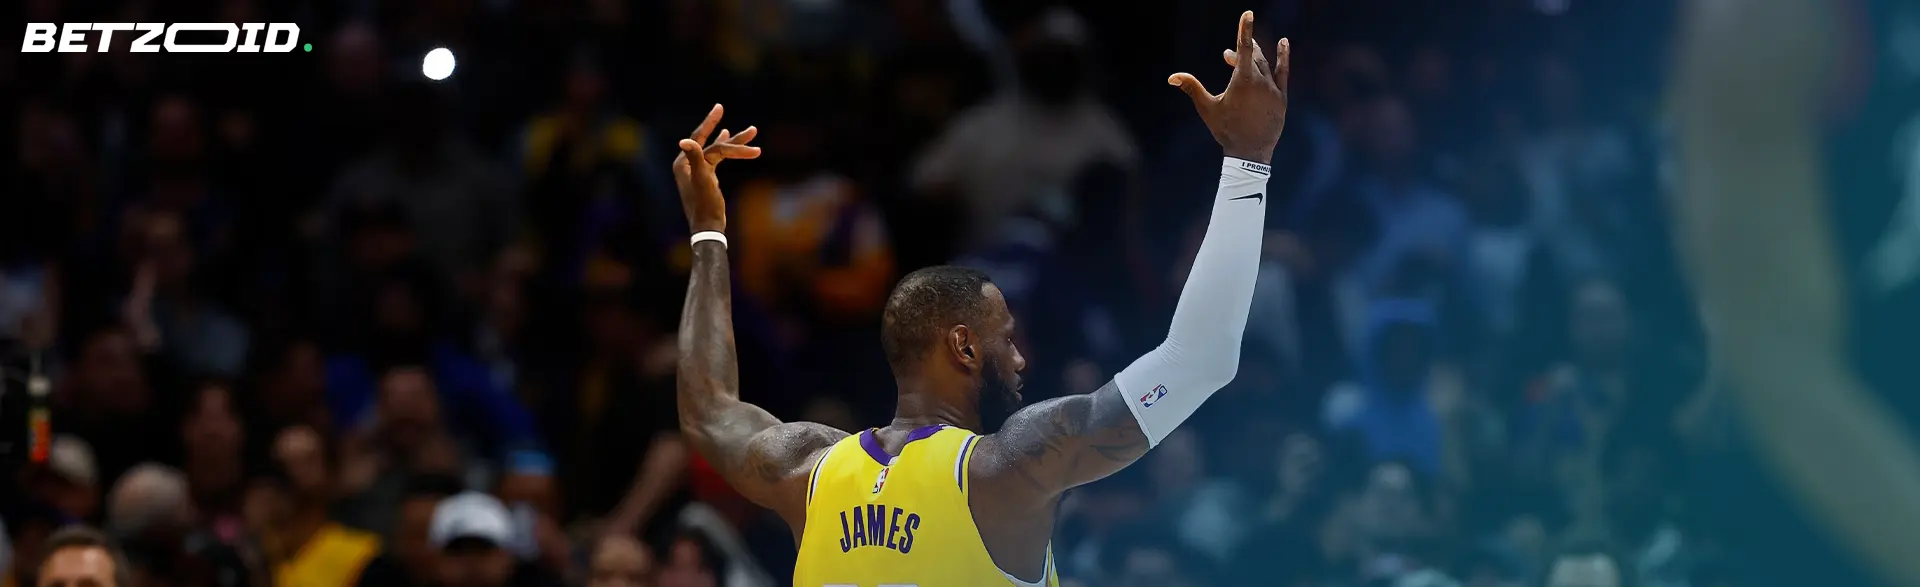 A basketball athlete reaching upwards, symbolic of the aspiration in NBA sportsbooks.